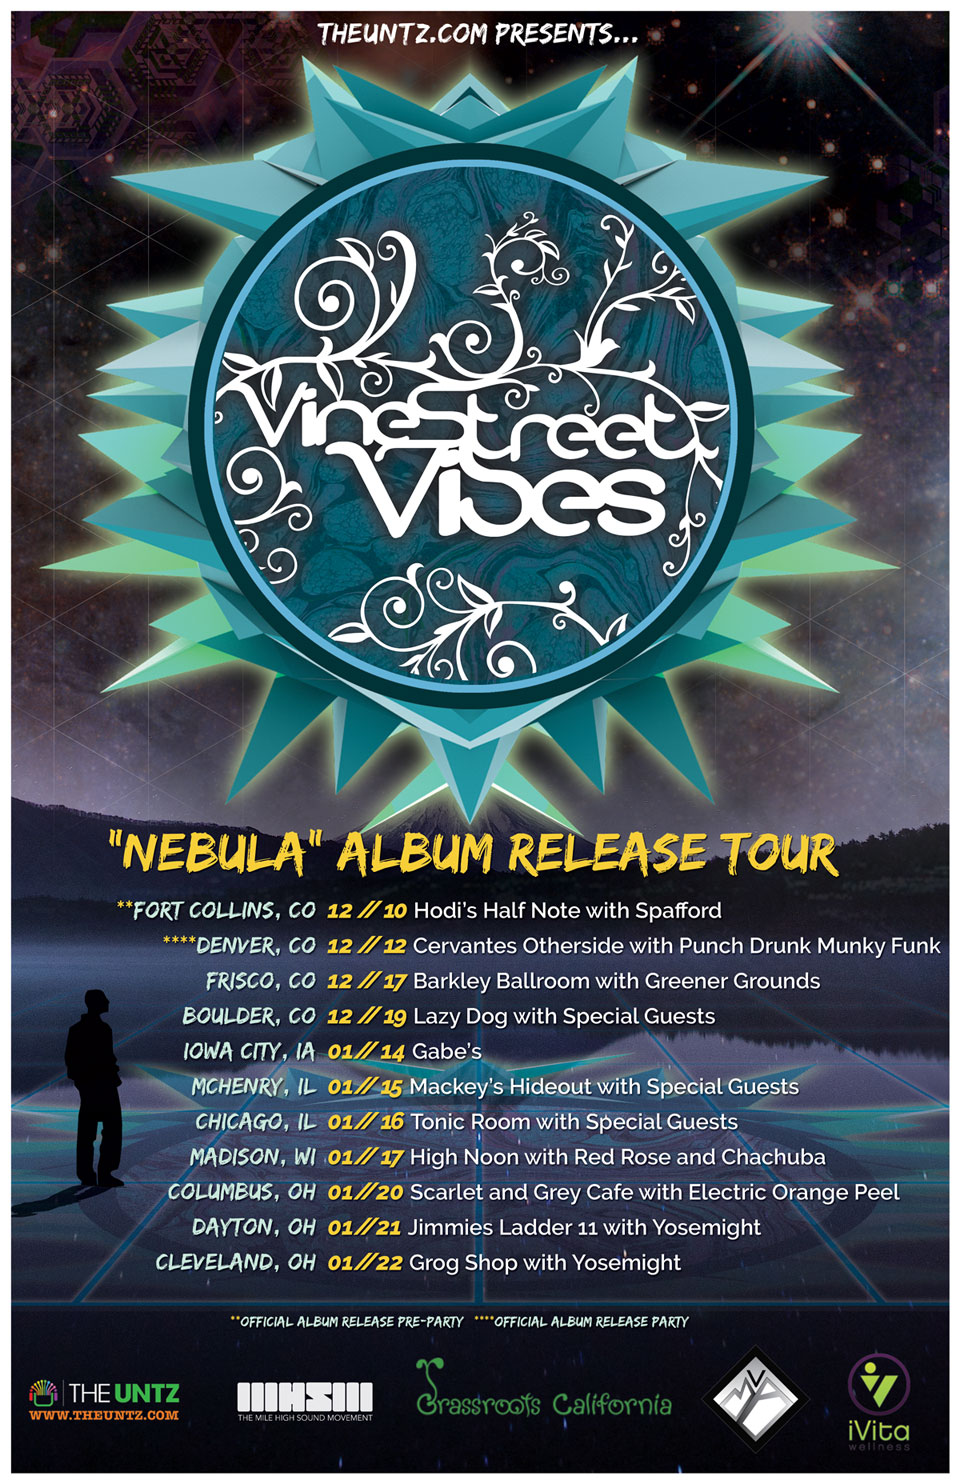 Vine Street Vibes - Nebula tour